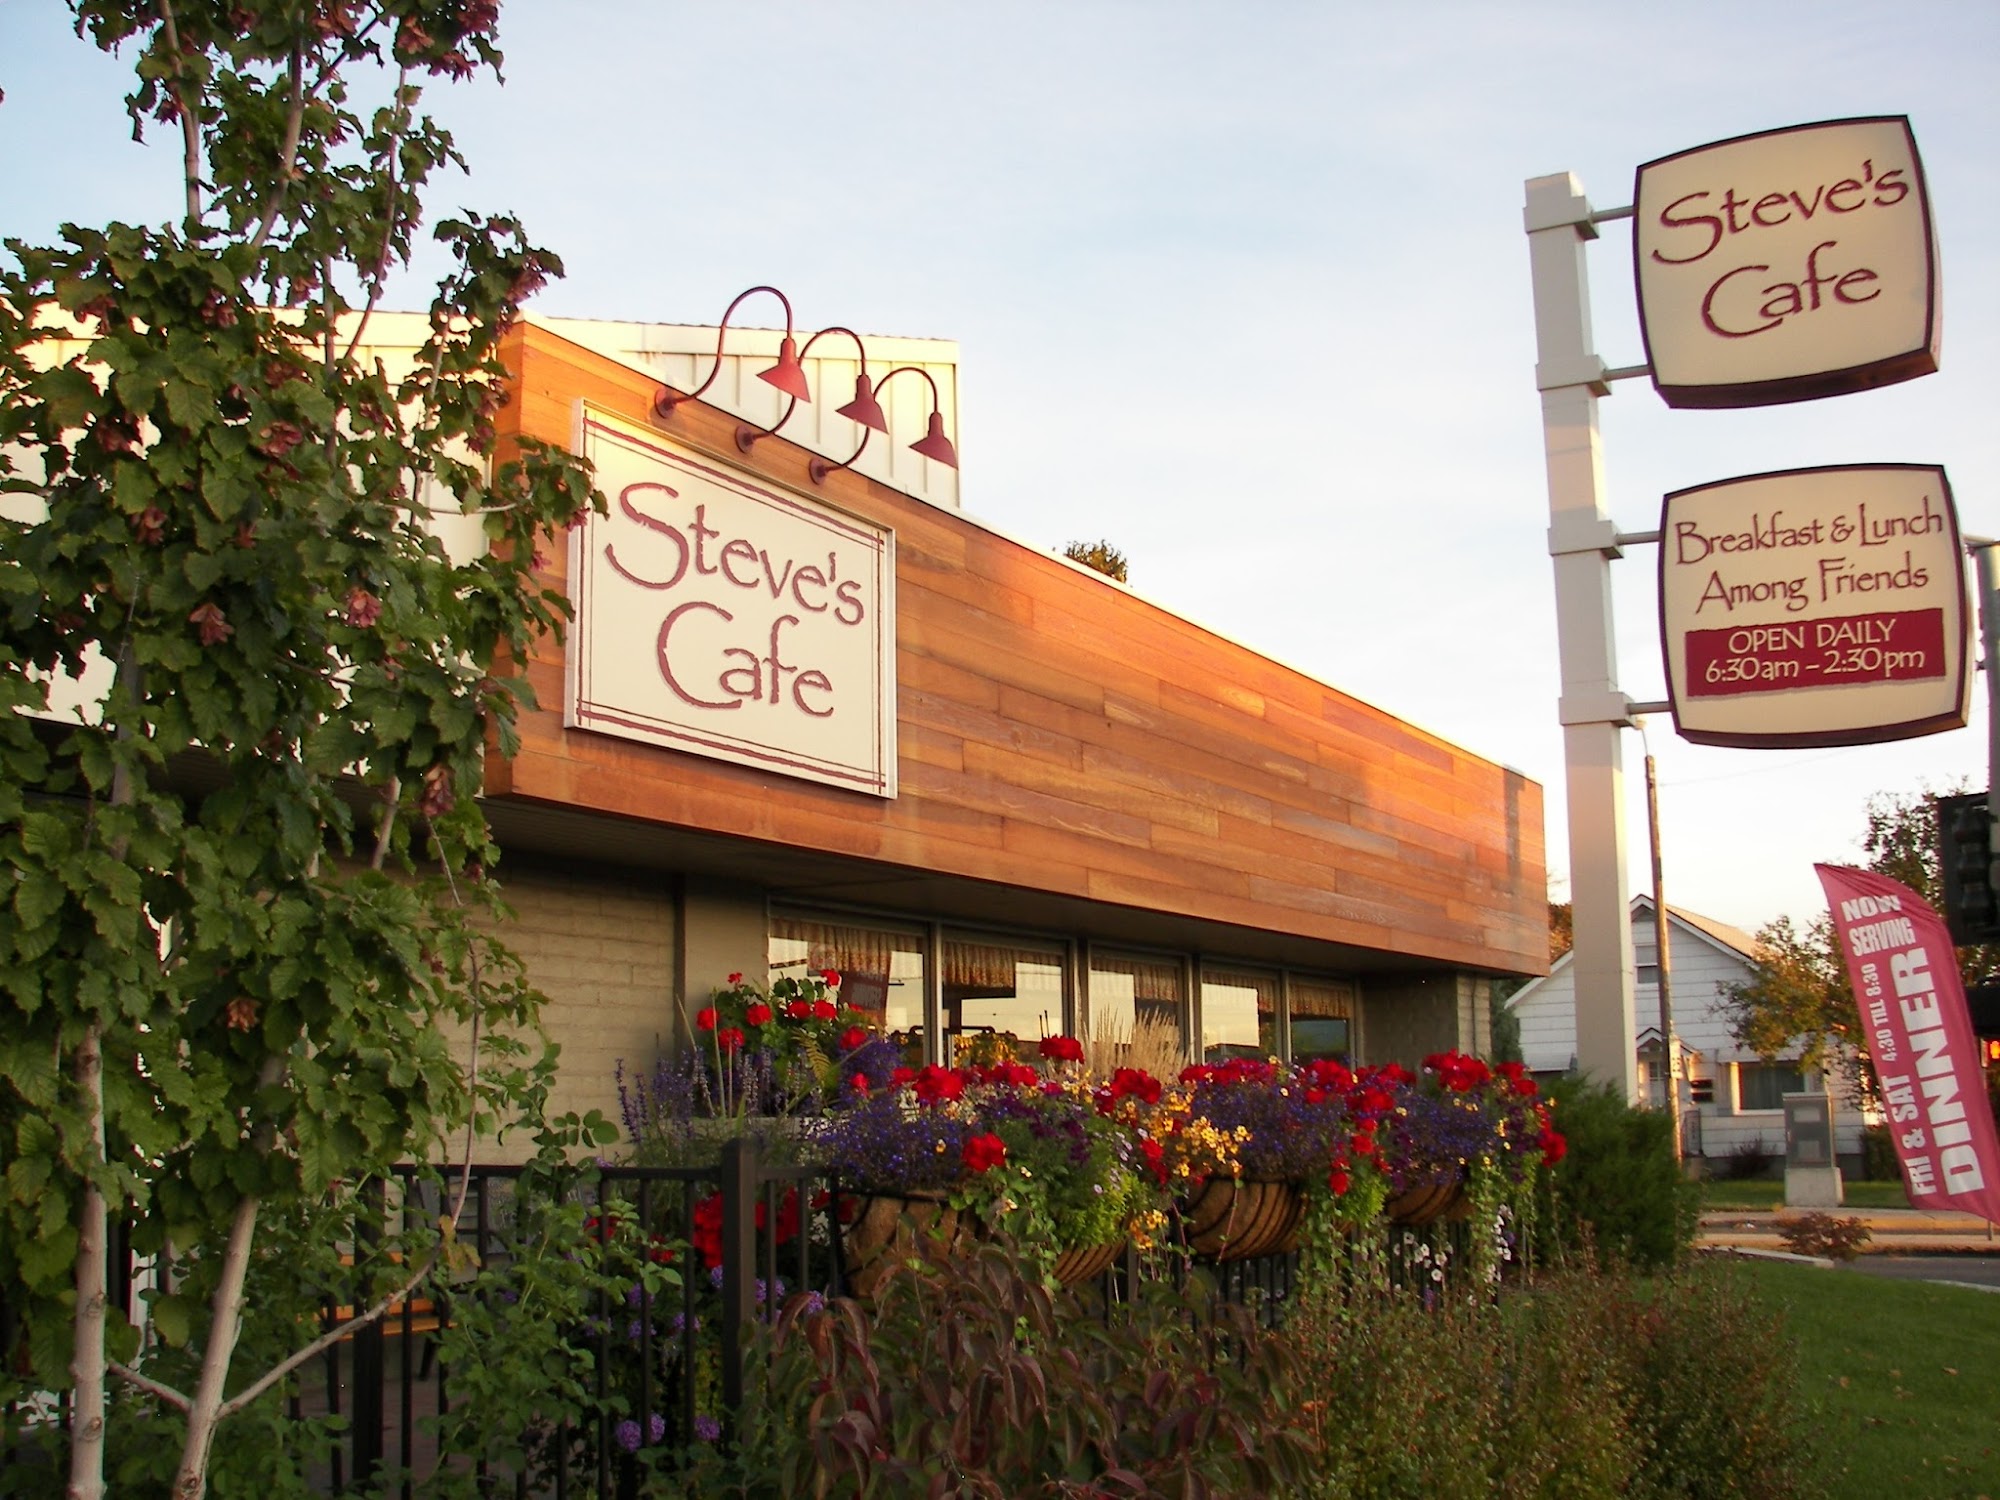 Steve's Cafe